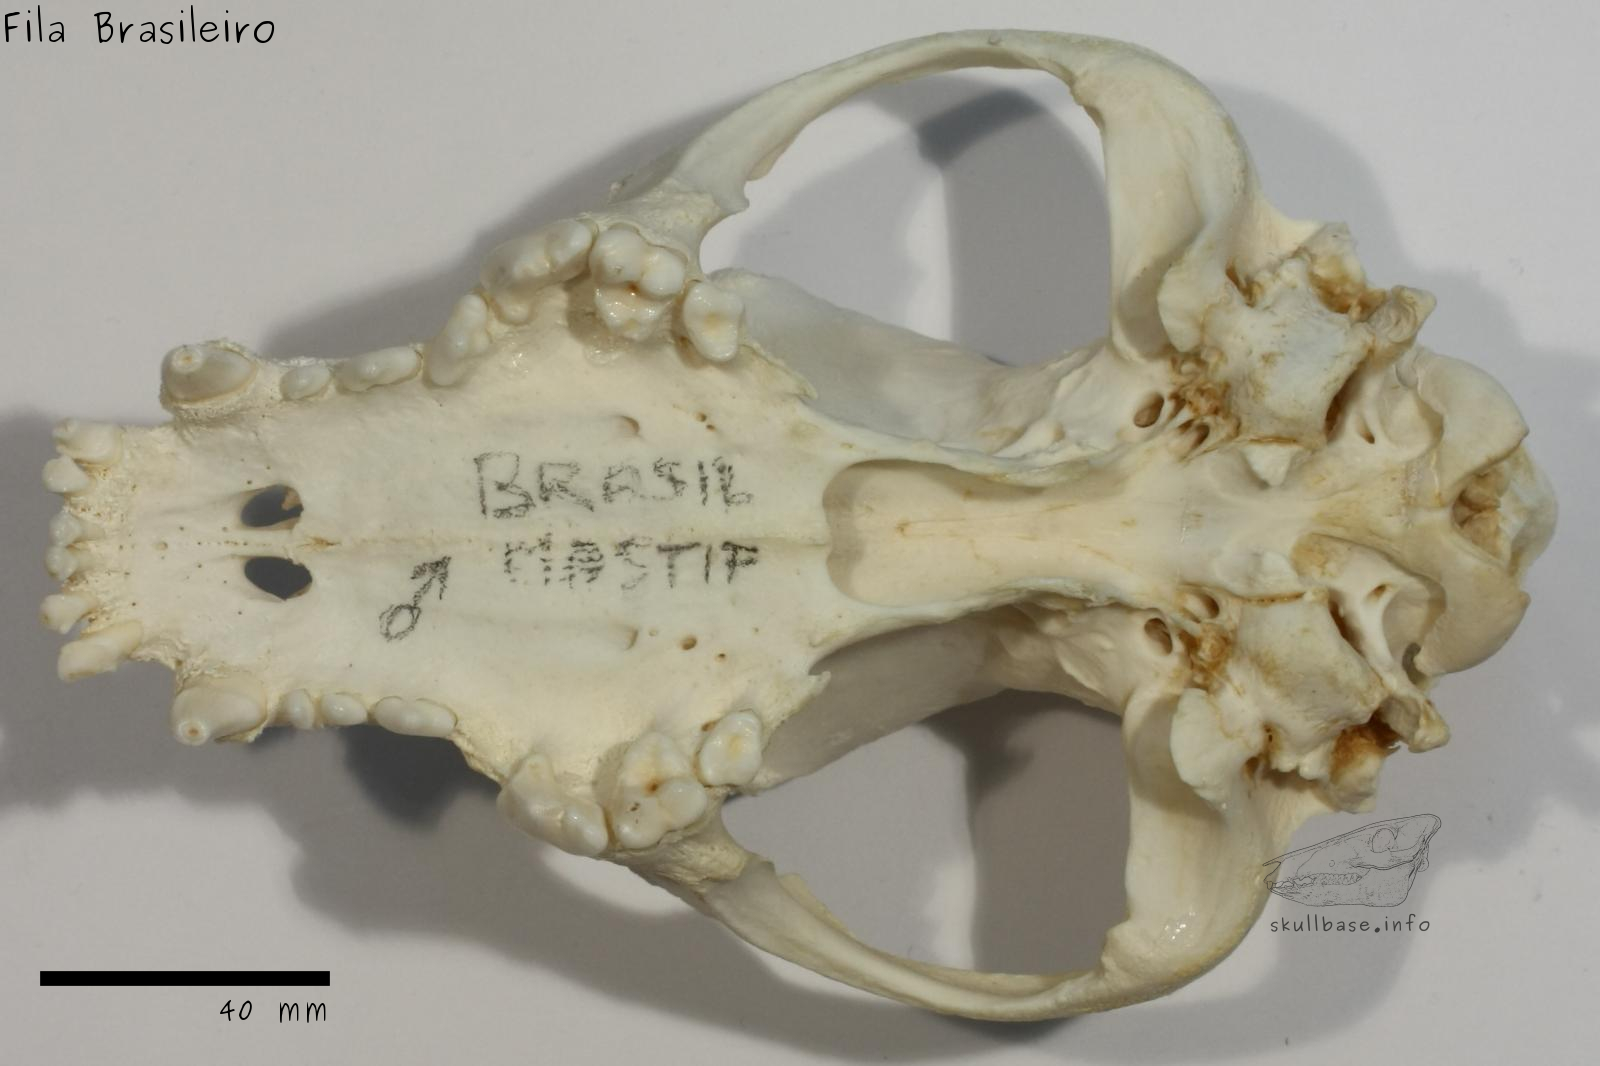 Fila Brasileiro (Canis lupus familiaris) skull ventral view